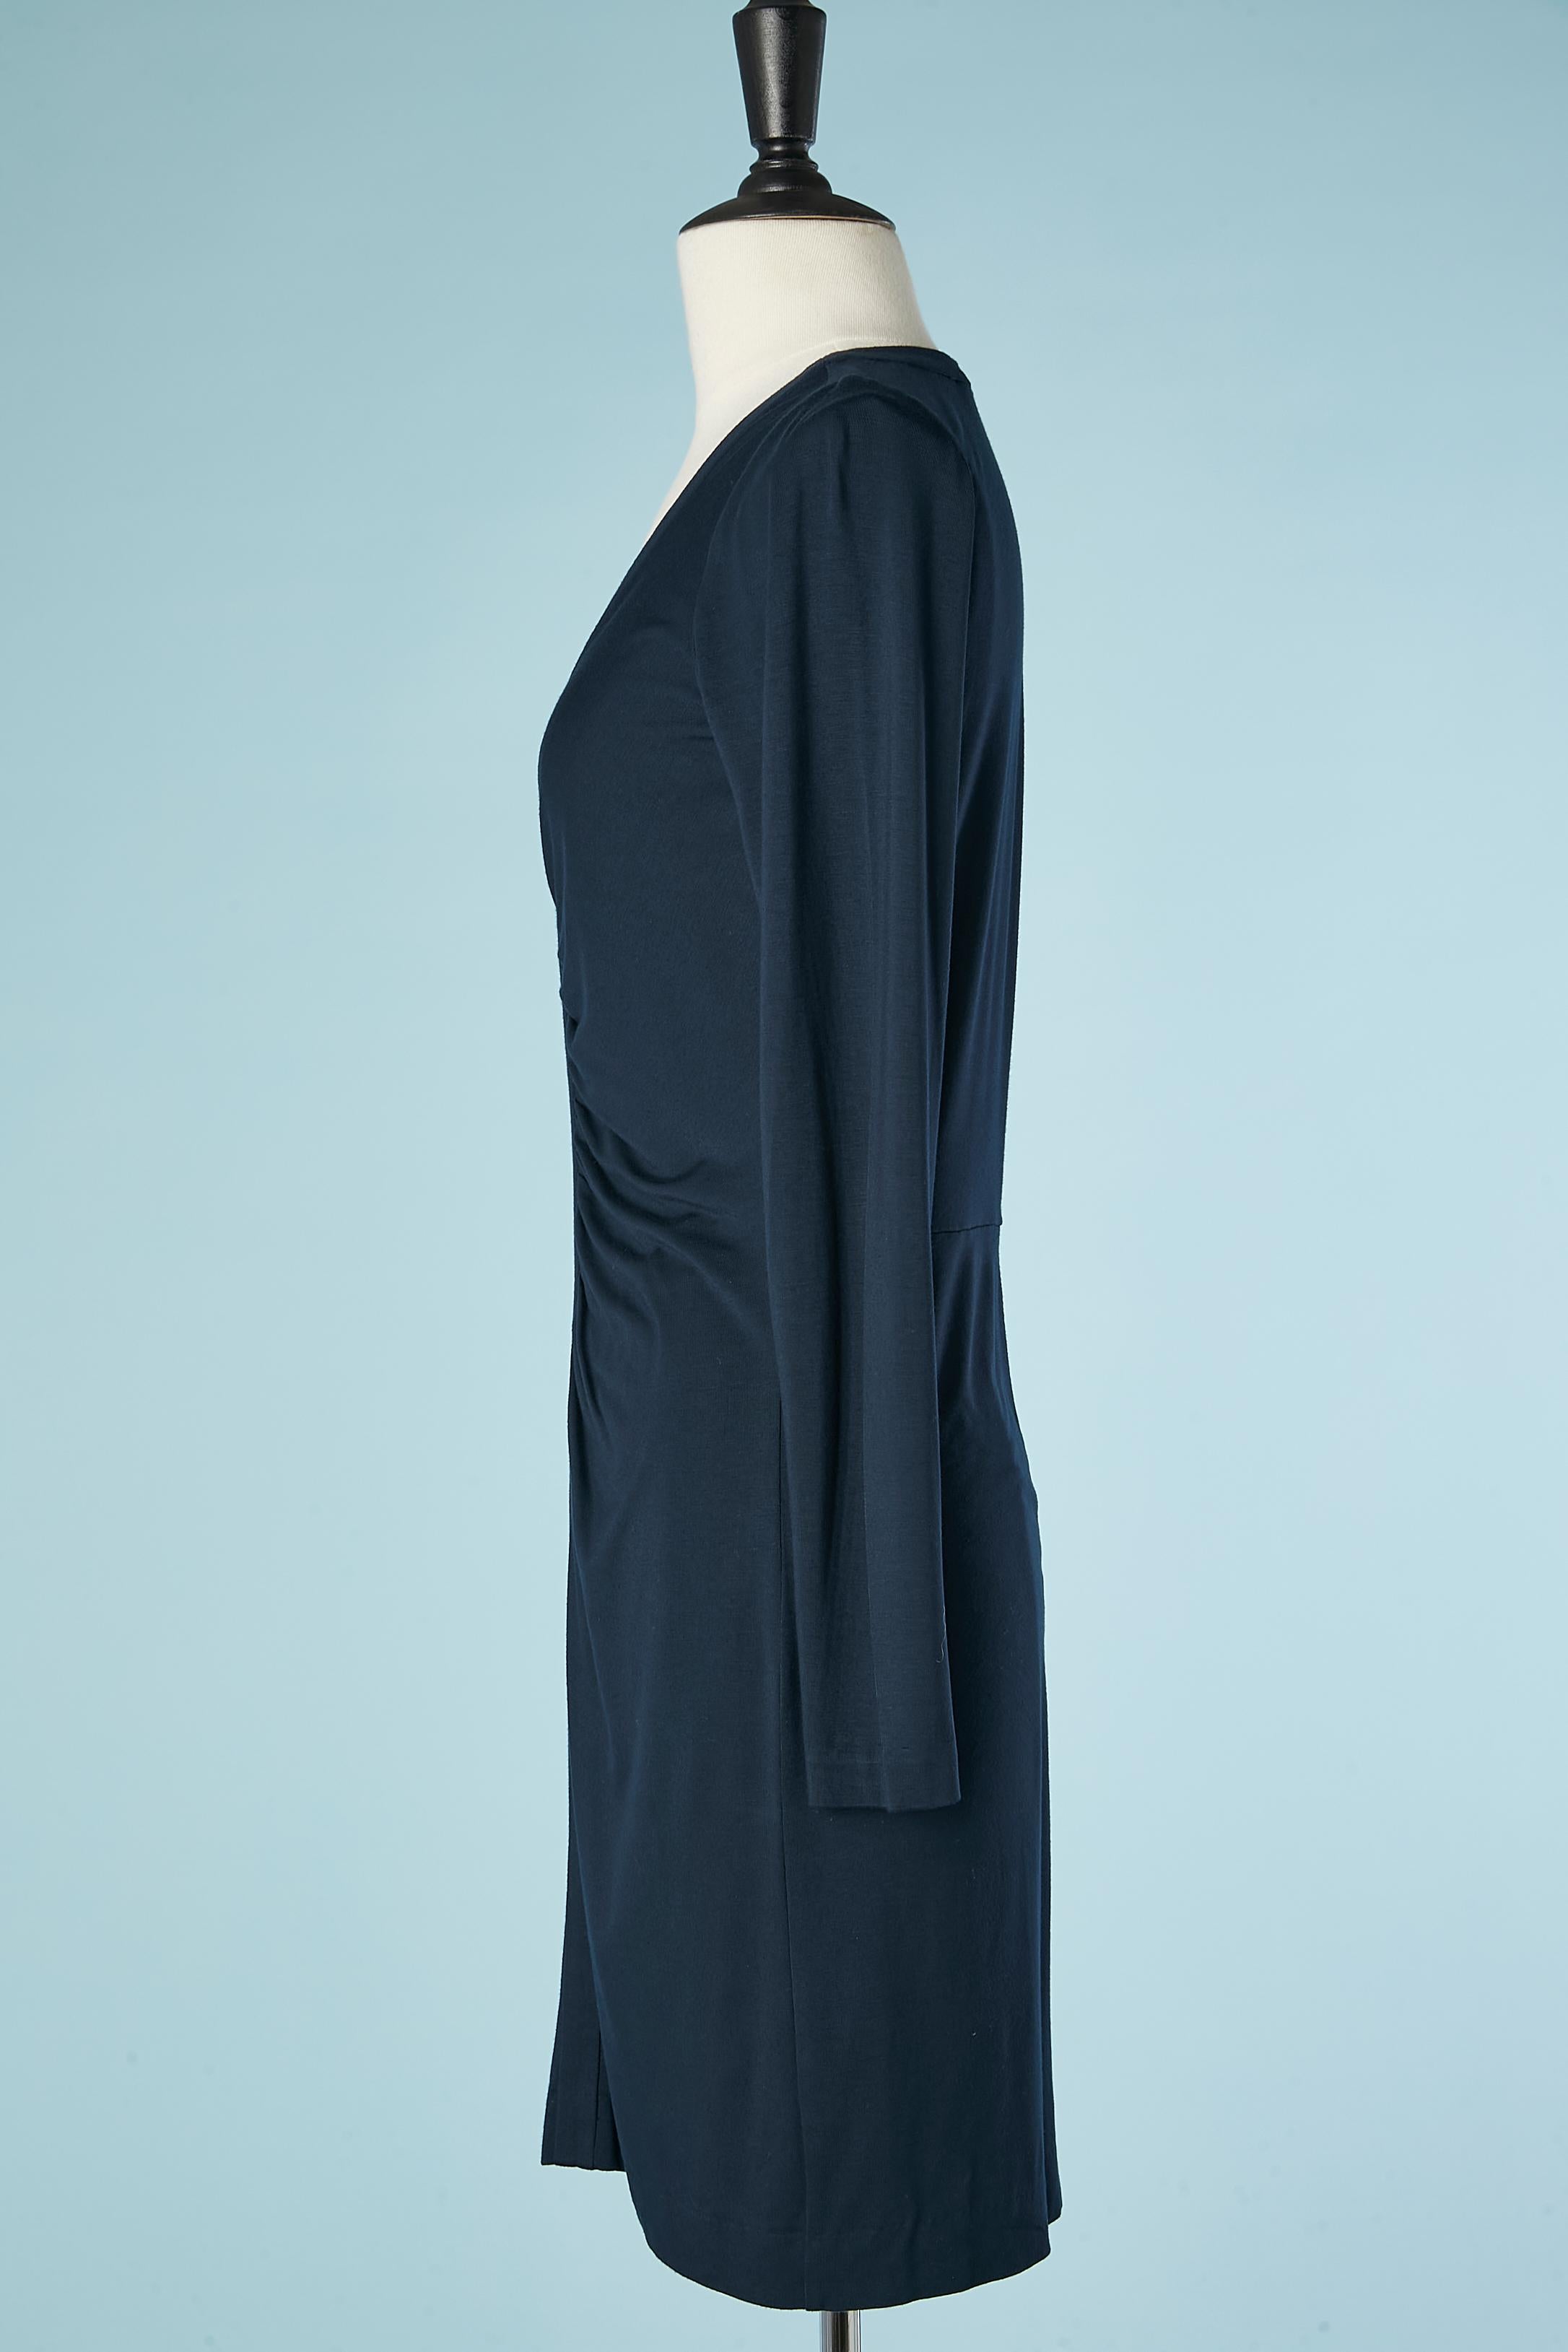 Black Navy blue cotton jersey dress draped in the front Diane Von Furstenberg  For Sale